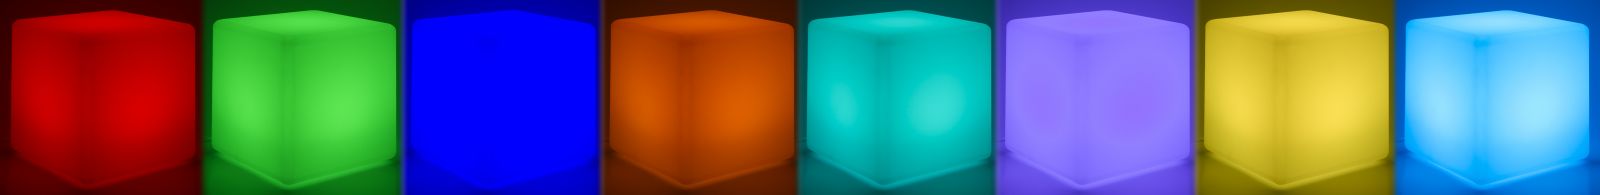 LED kubus in prachtige kleuren